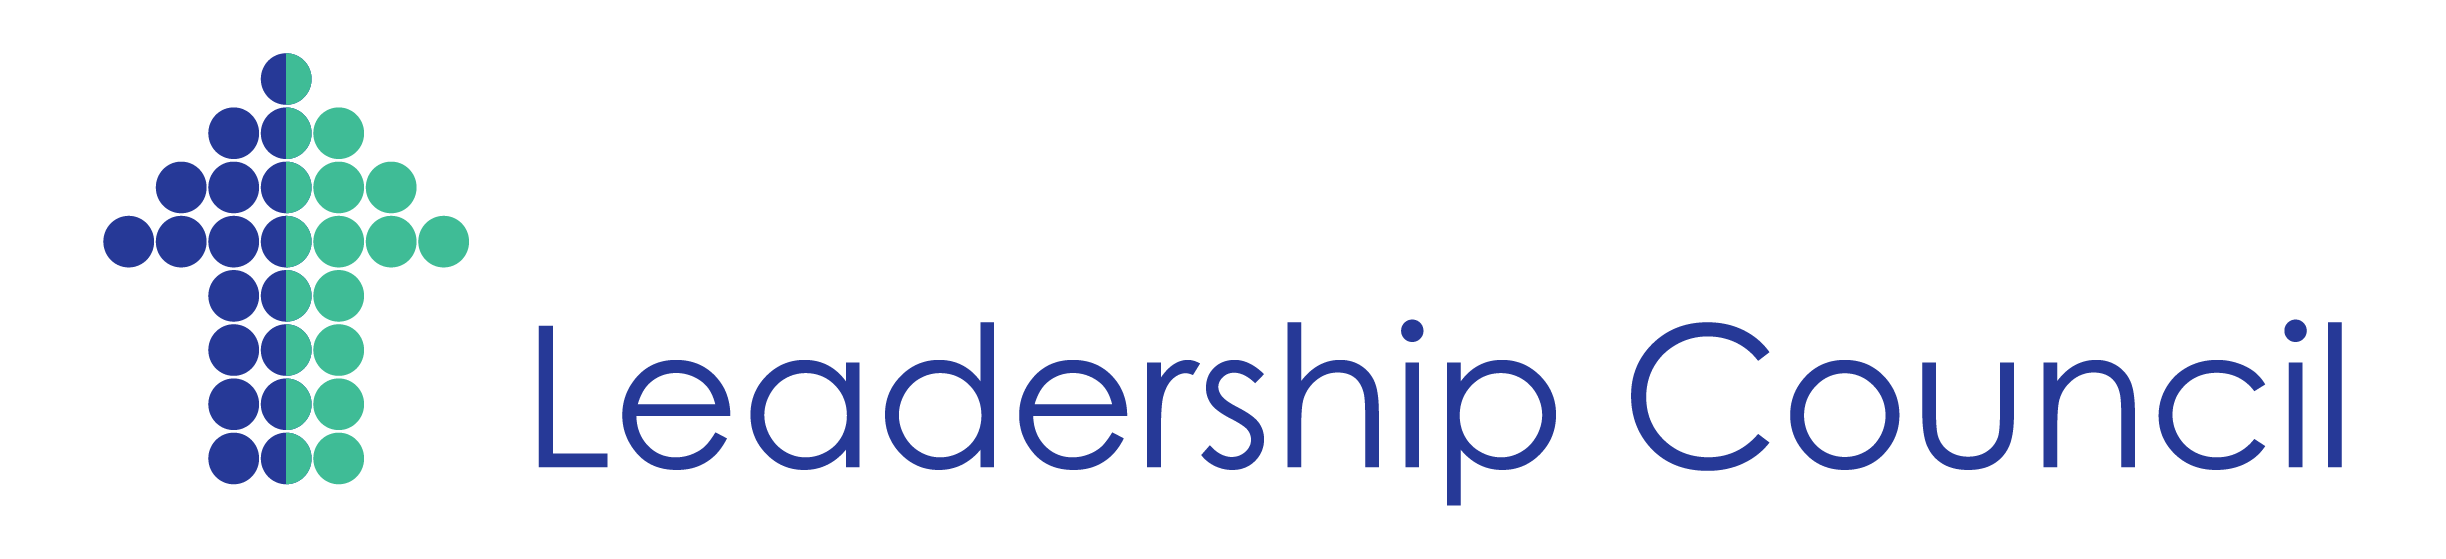 Leadership Council Website